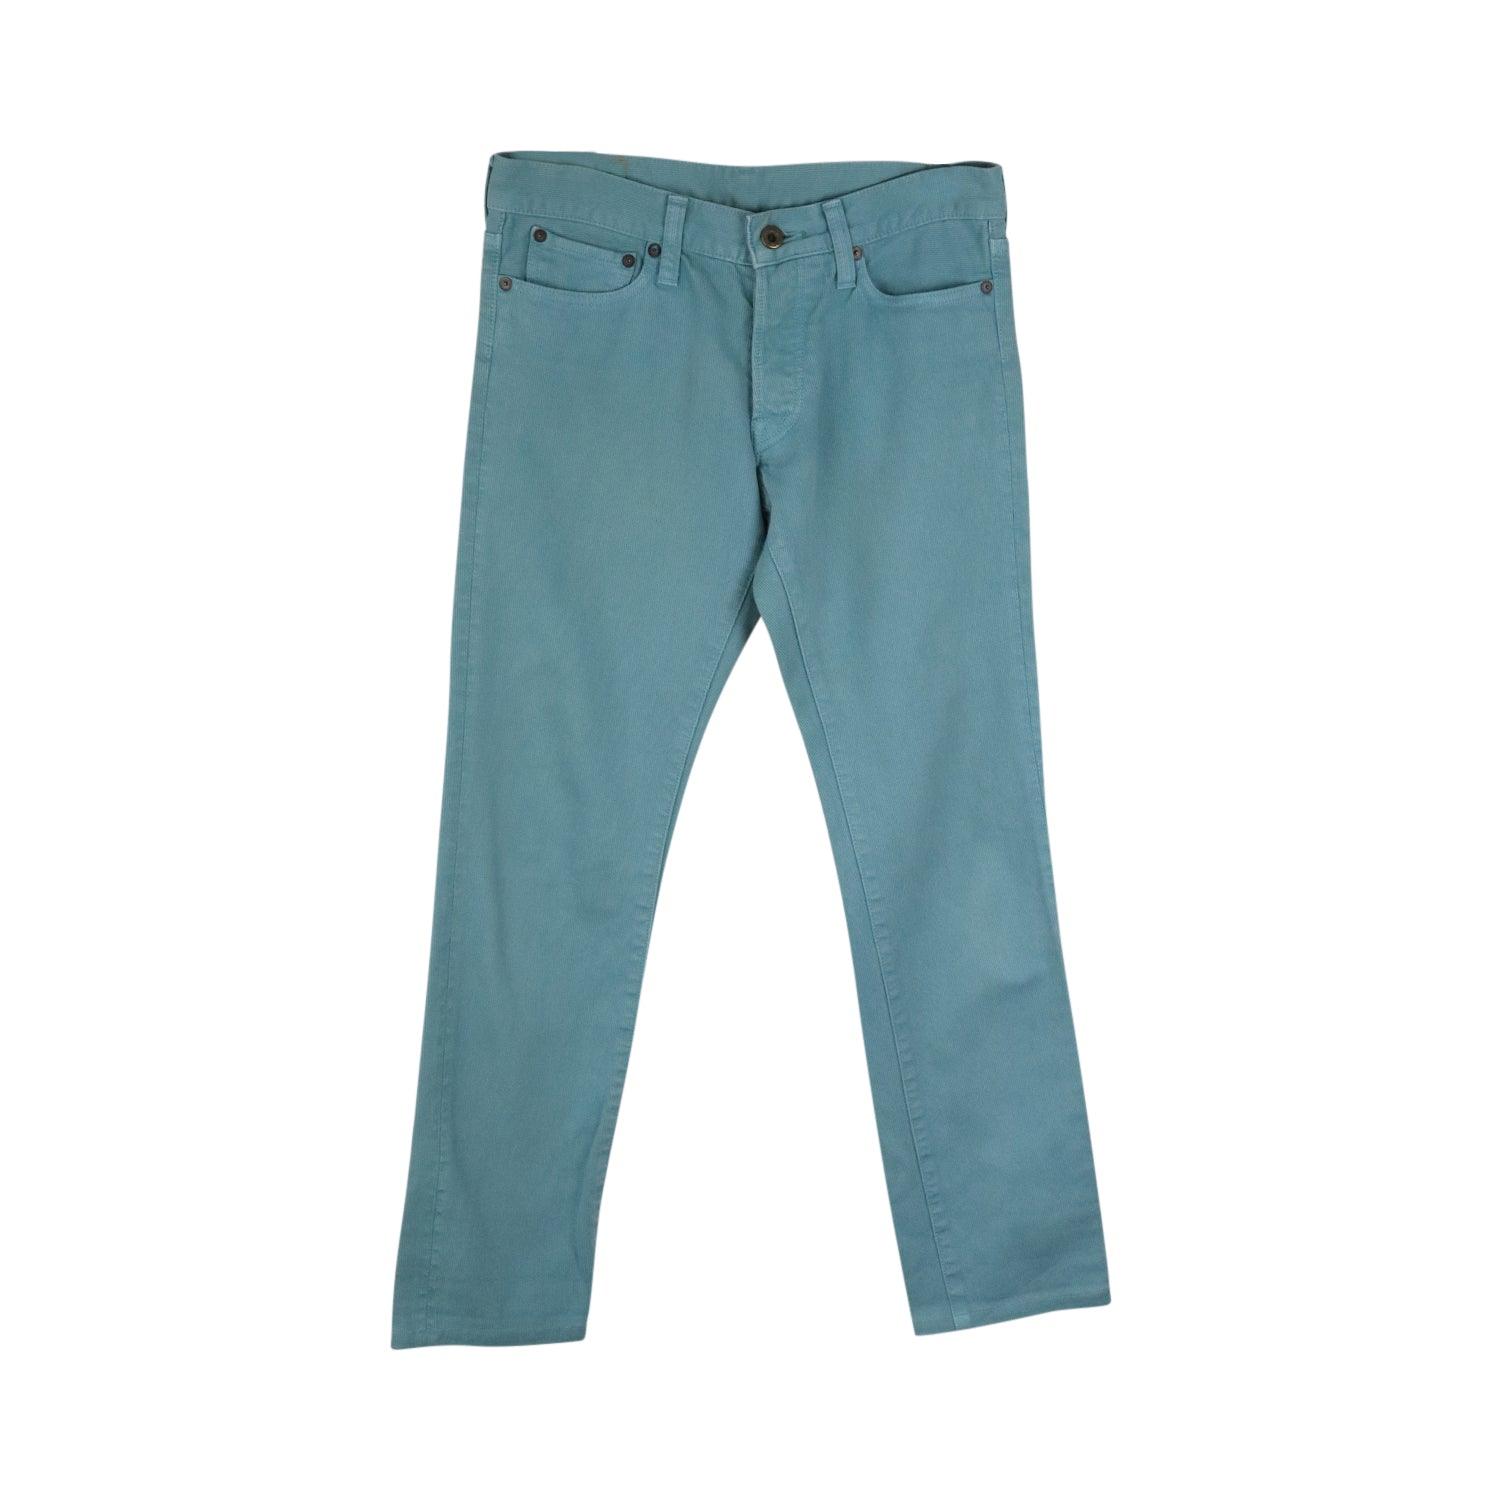 Kapital Jeans - Men's 28 - Fashionably Yours